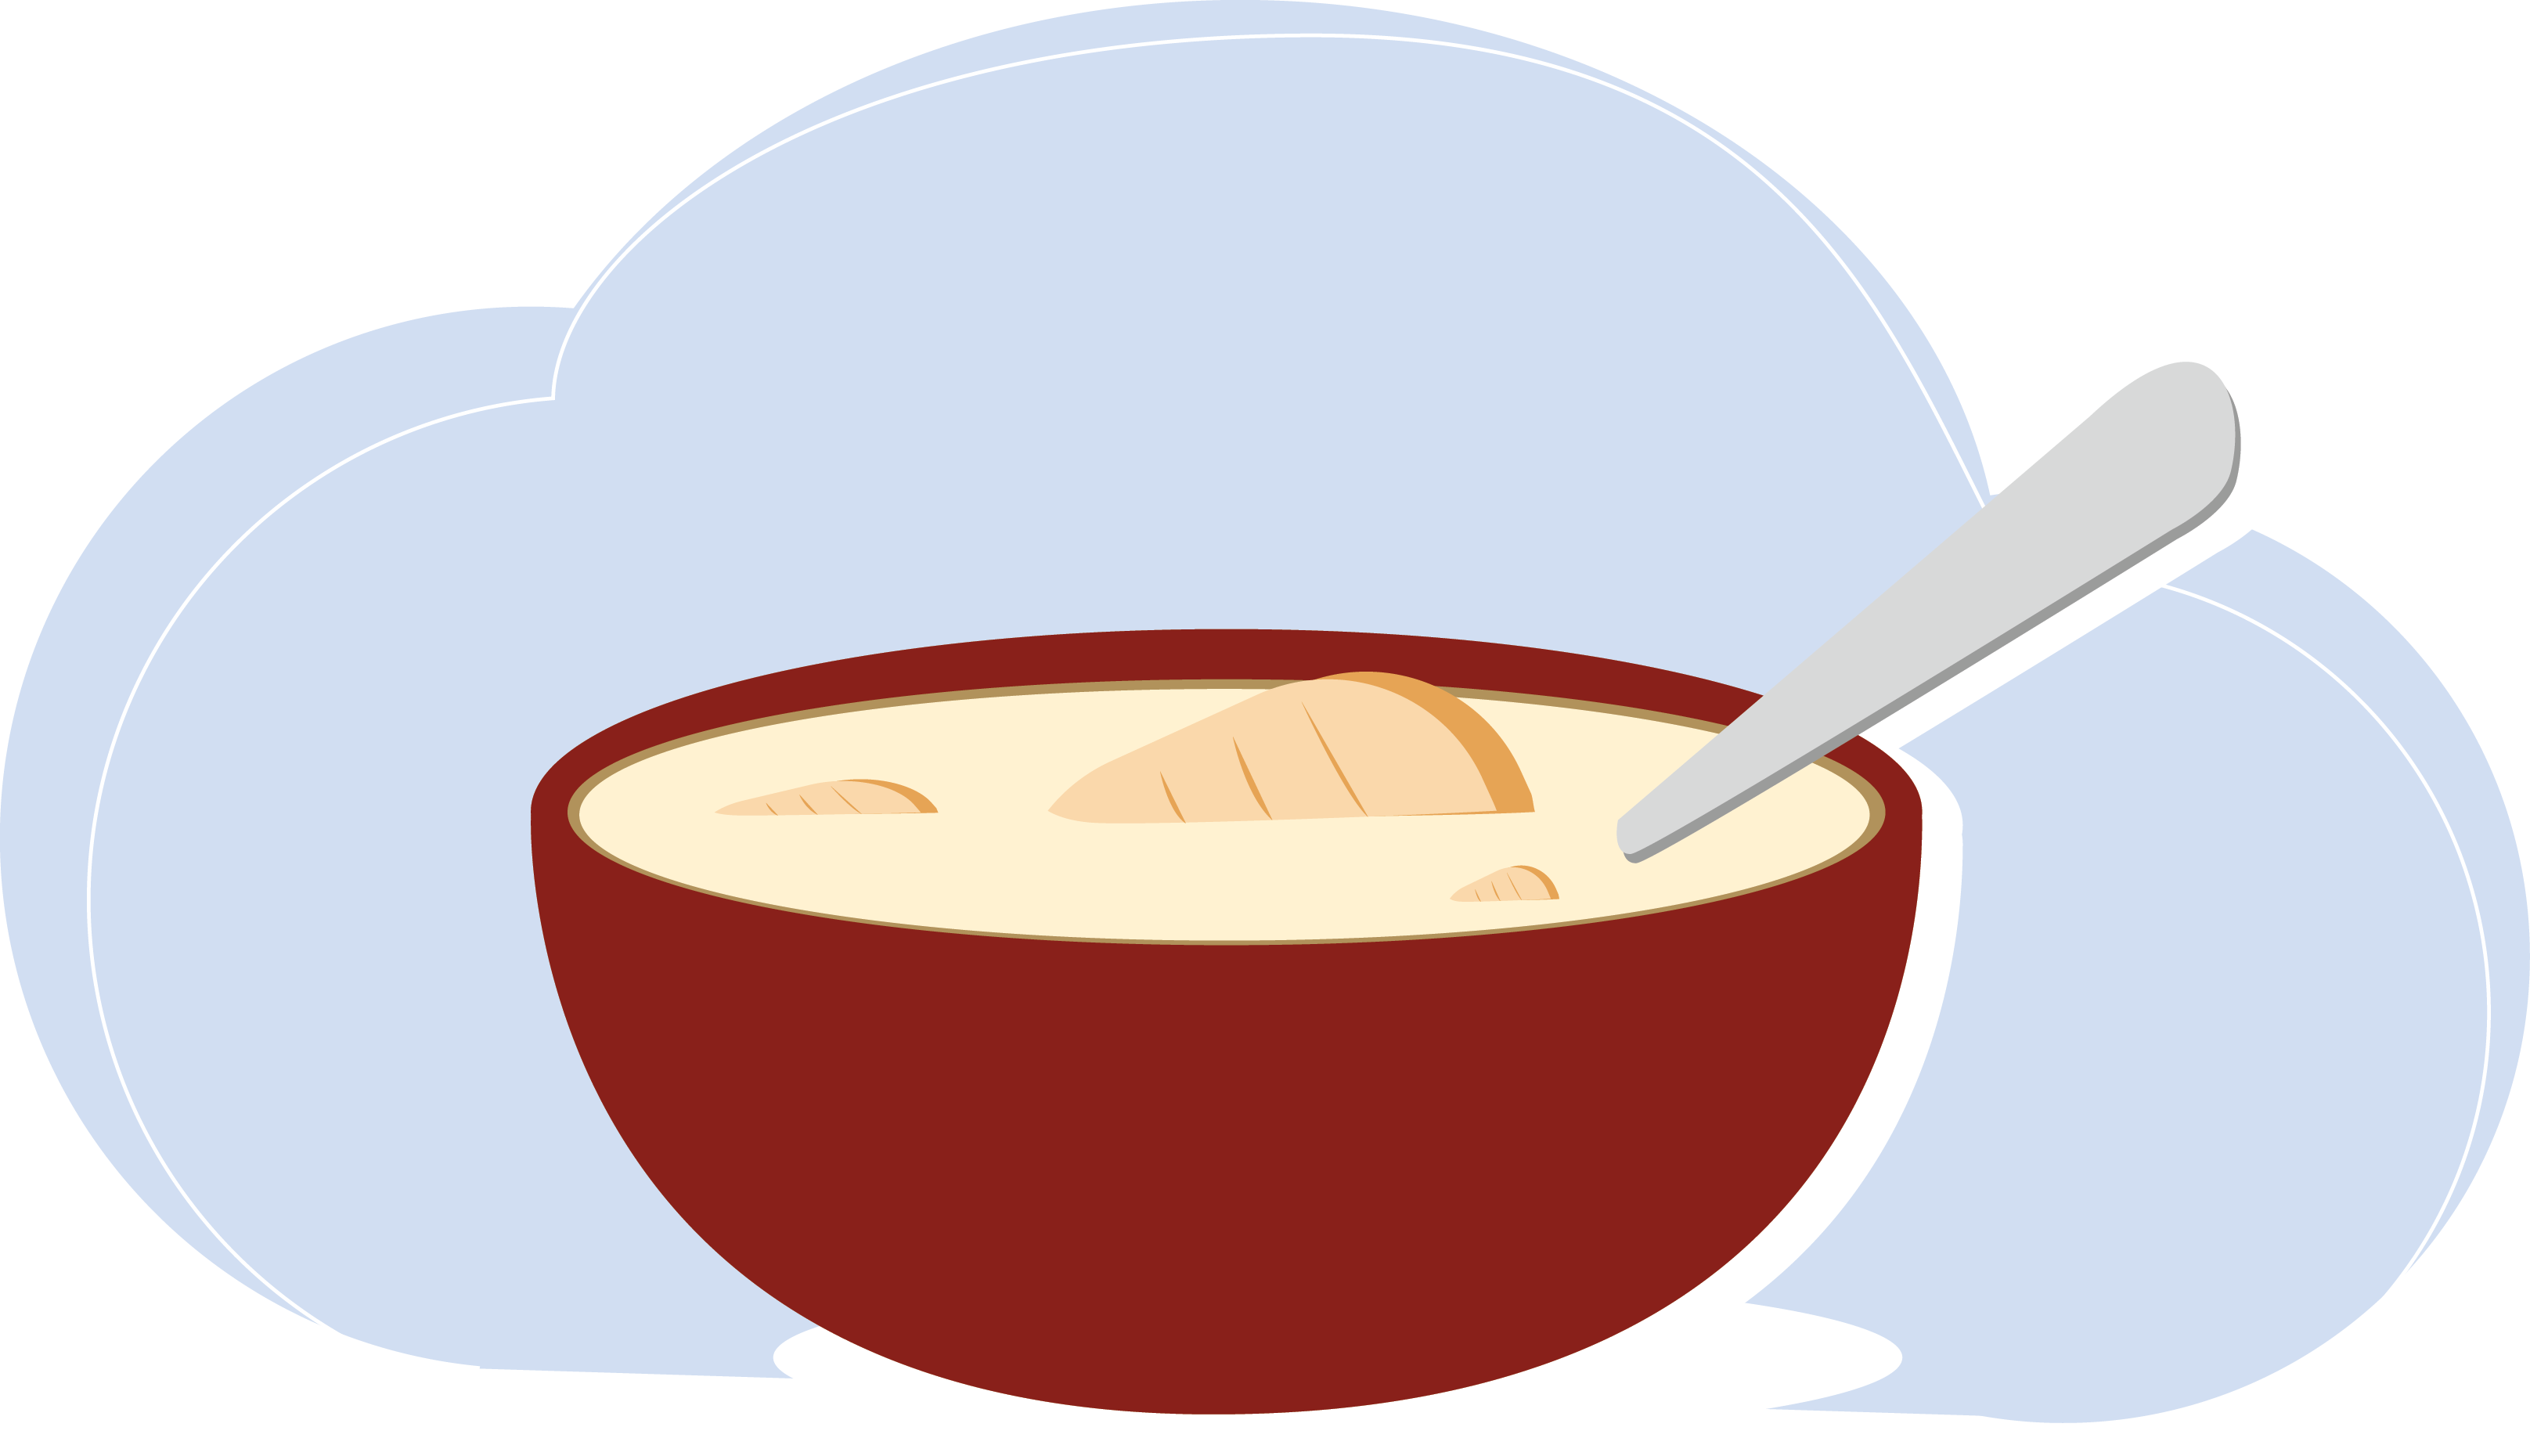 Dish clipart milk bowl. Feds student food bank